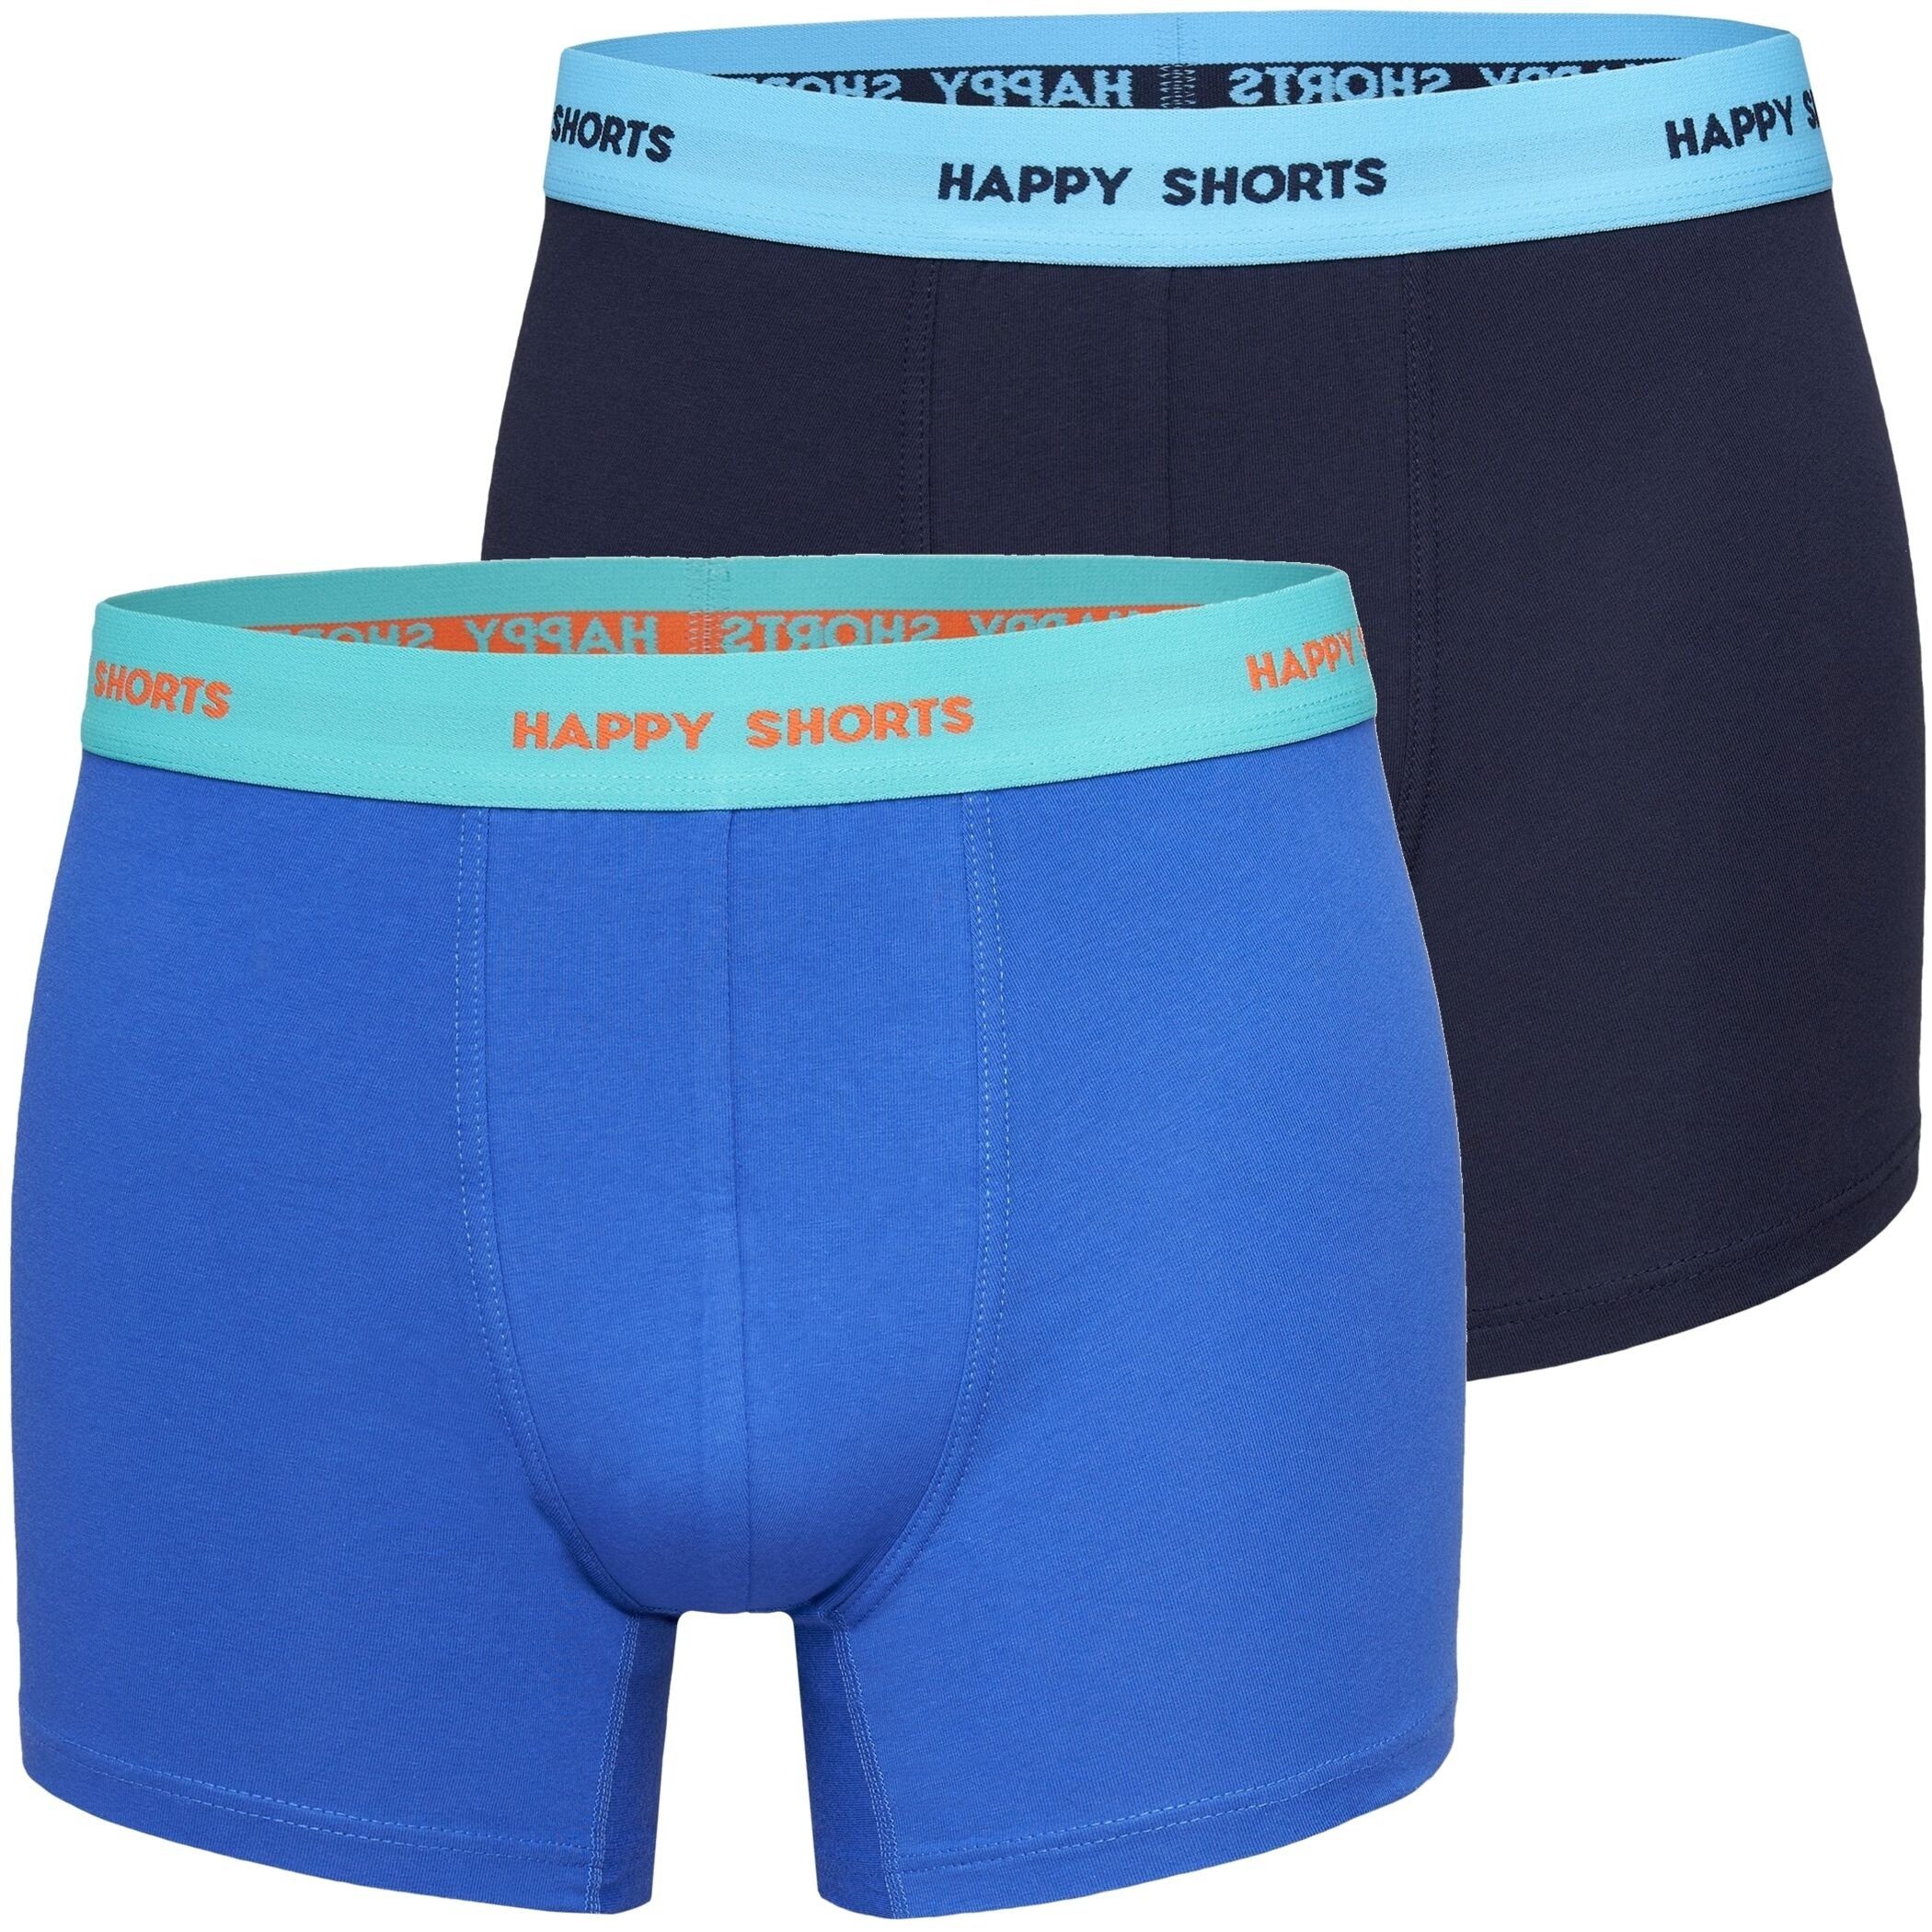 (1-St) 1 Jersey Trunk 2 Uni Pant HAPPY Boxer Trunk Blau Boxershorts Happy Herren Navy Shorts SHORTS